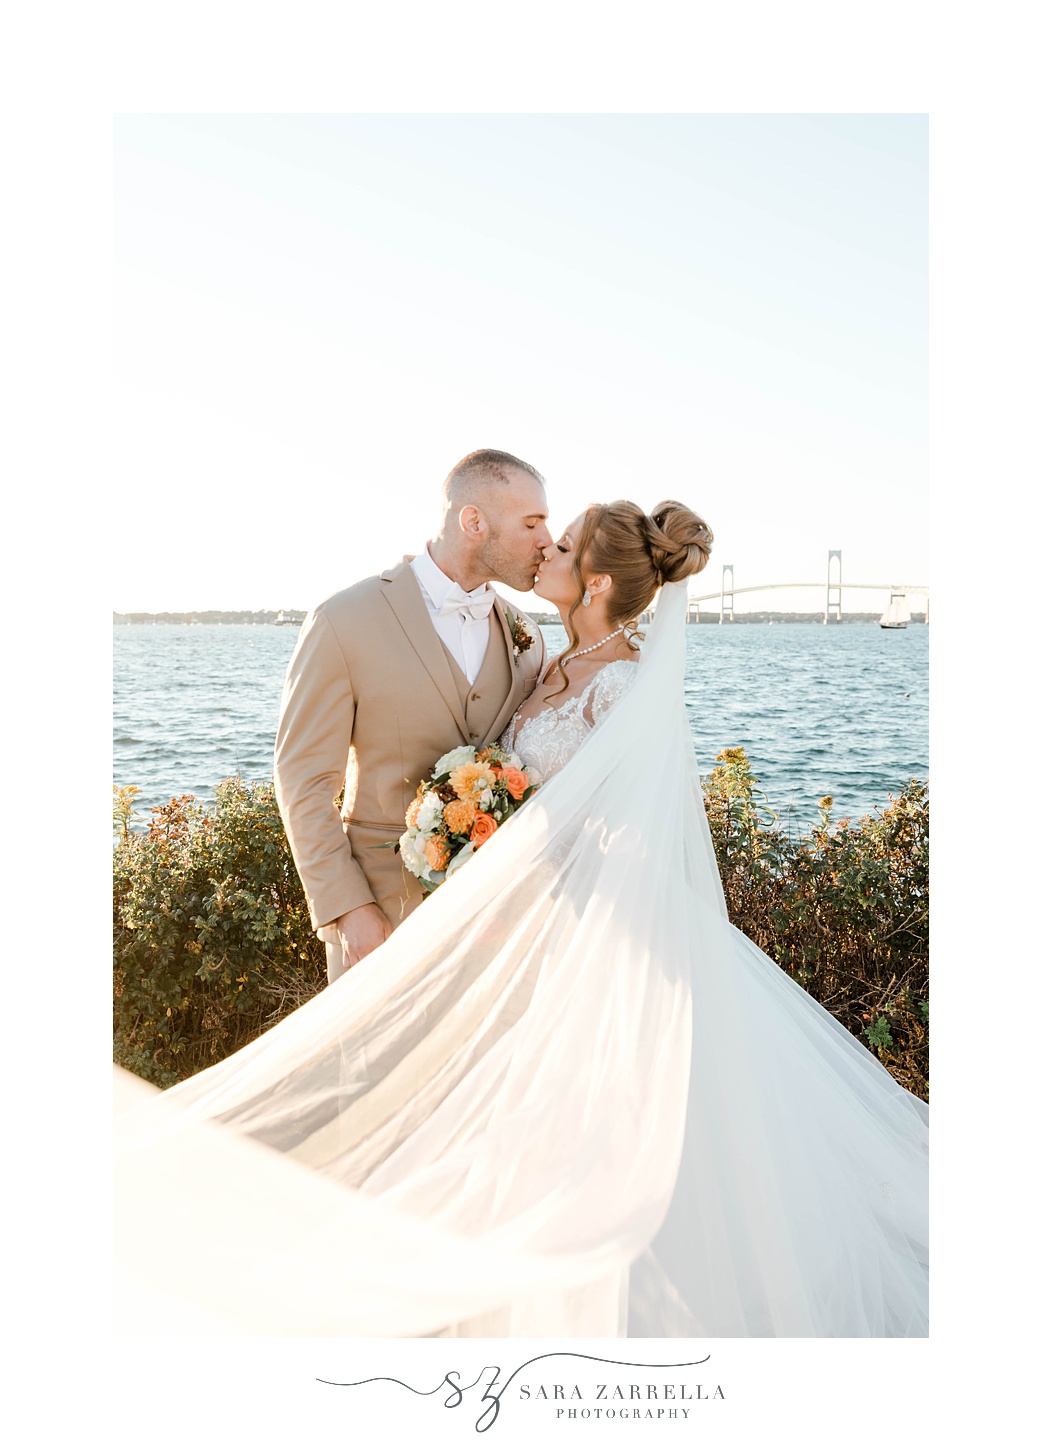 newlyweds kiss with bride's veil around them in Newport RI